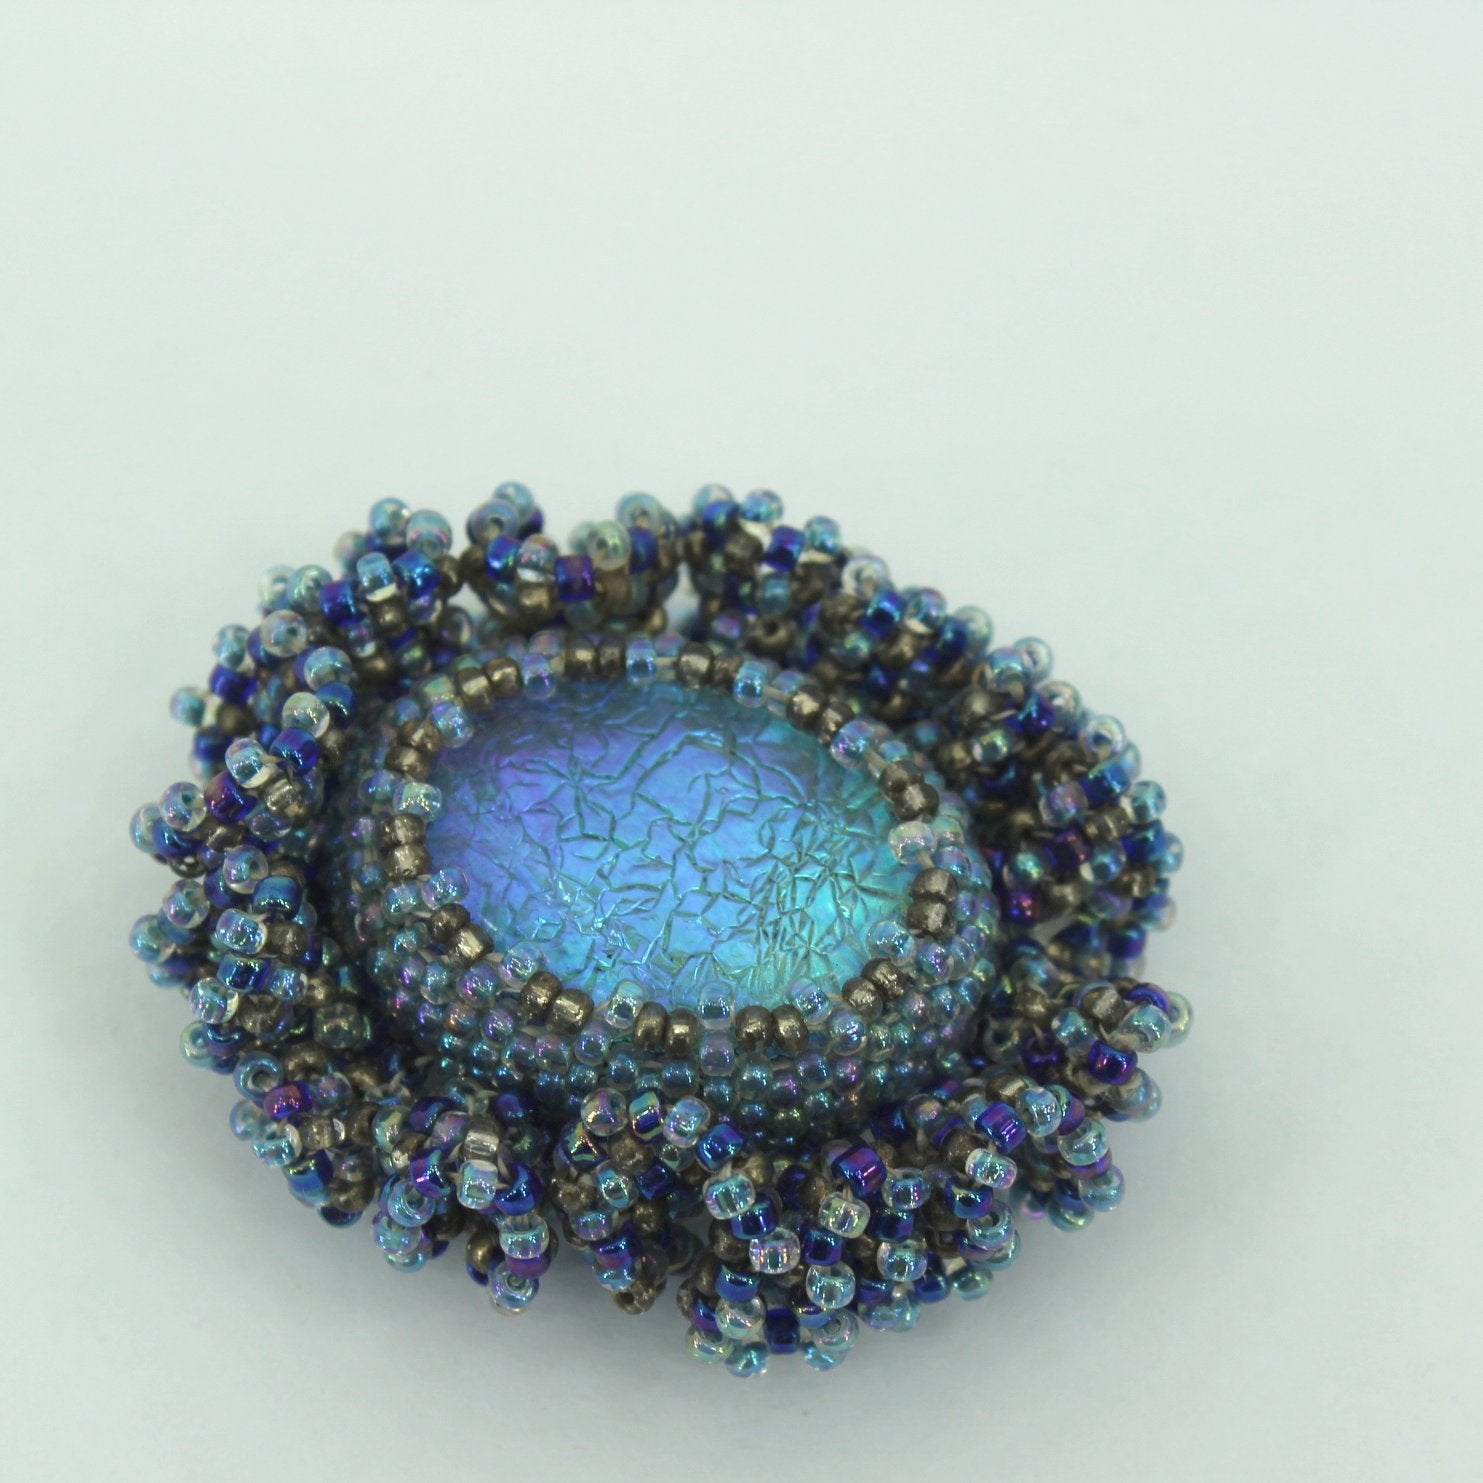 Pat Falk Early Work Glass Pin Iridescent Bead Ruffle Surround Brilliant Blues shades of brilliant blue